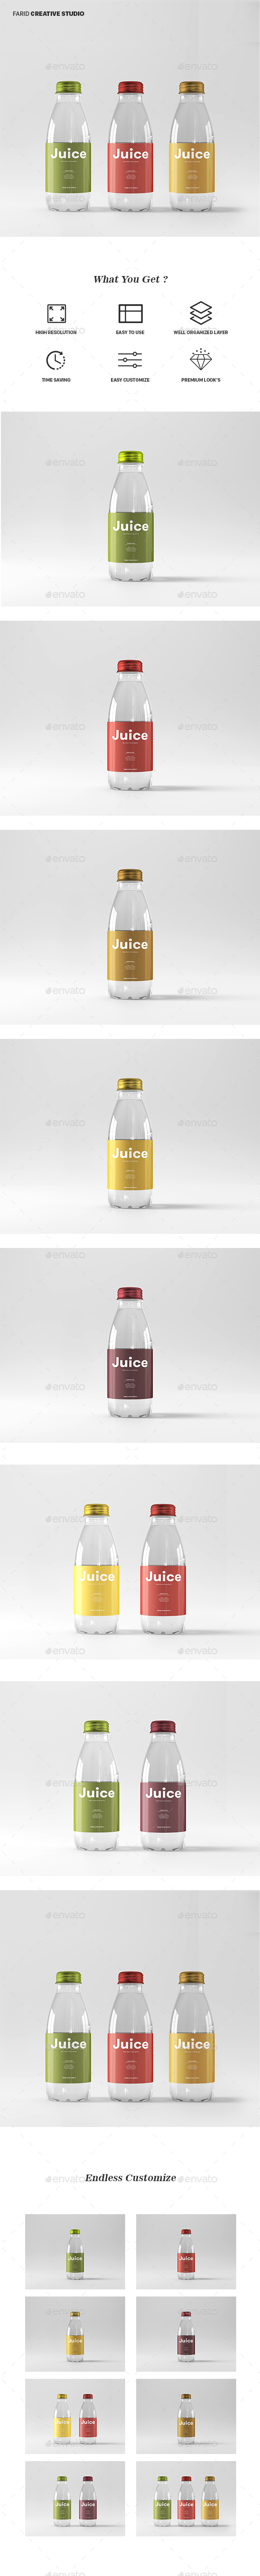 Juice Bottle Cool Packaging Mockup